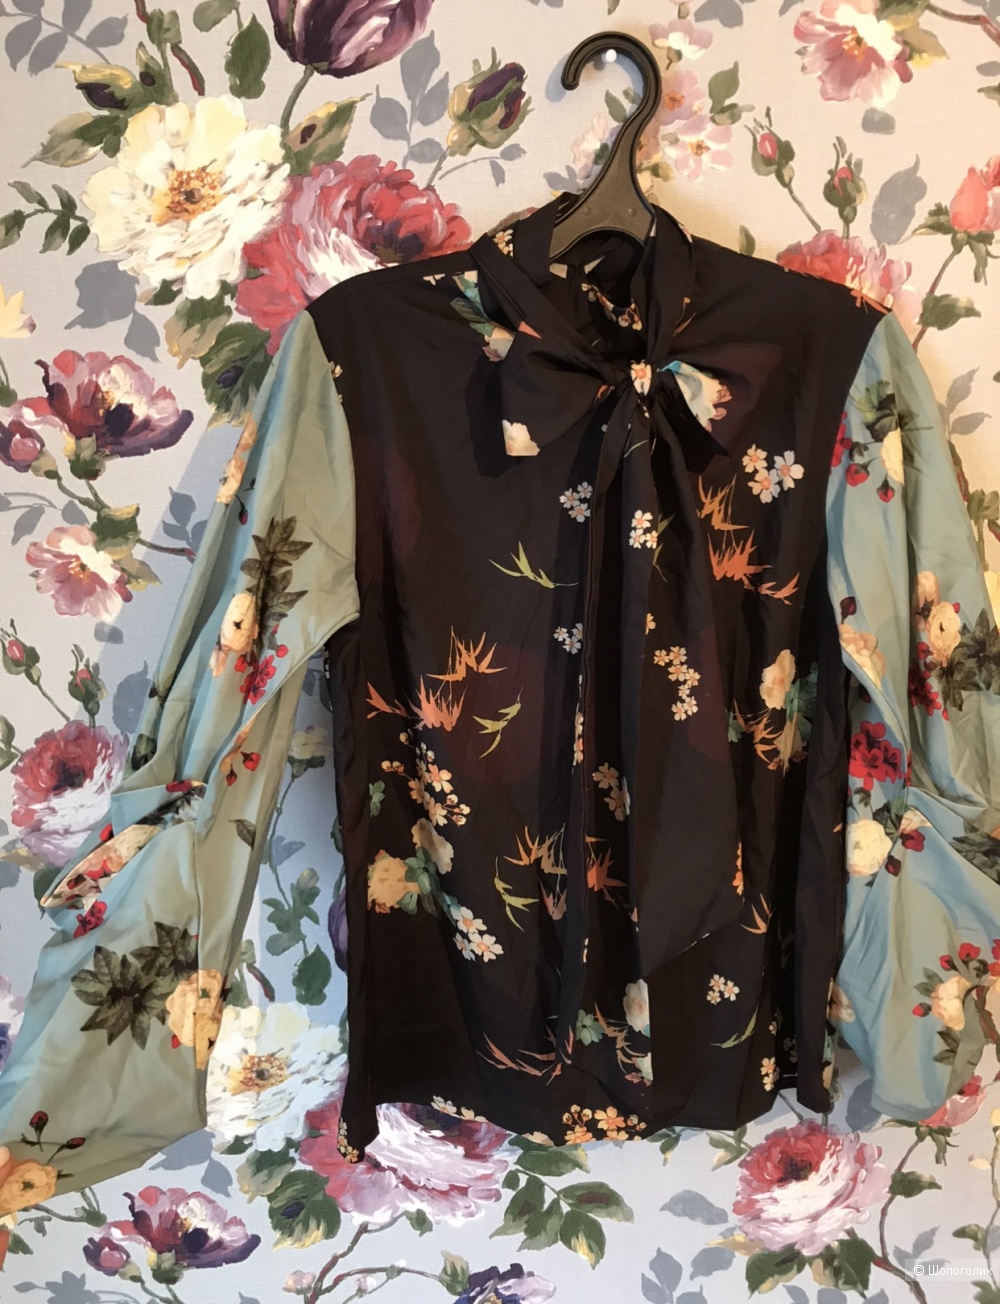 Блуза Zara Basic S размера